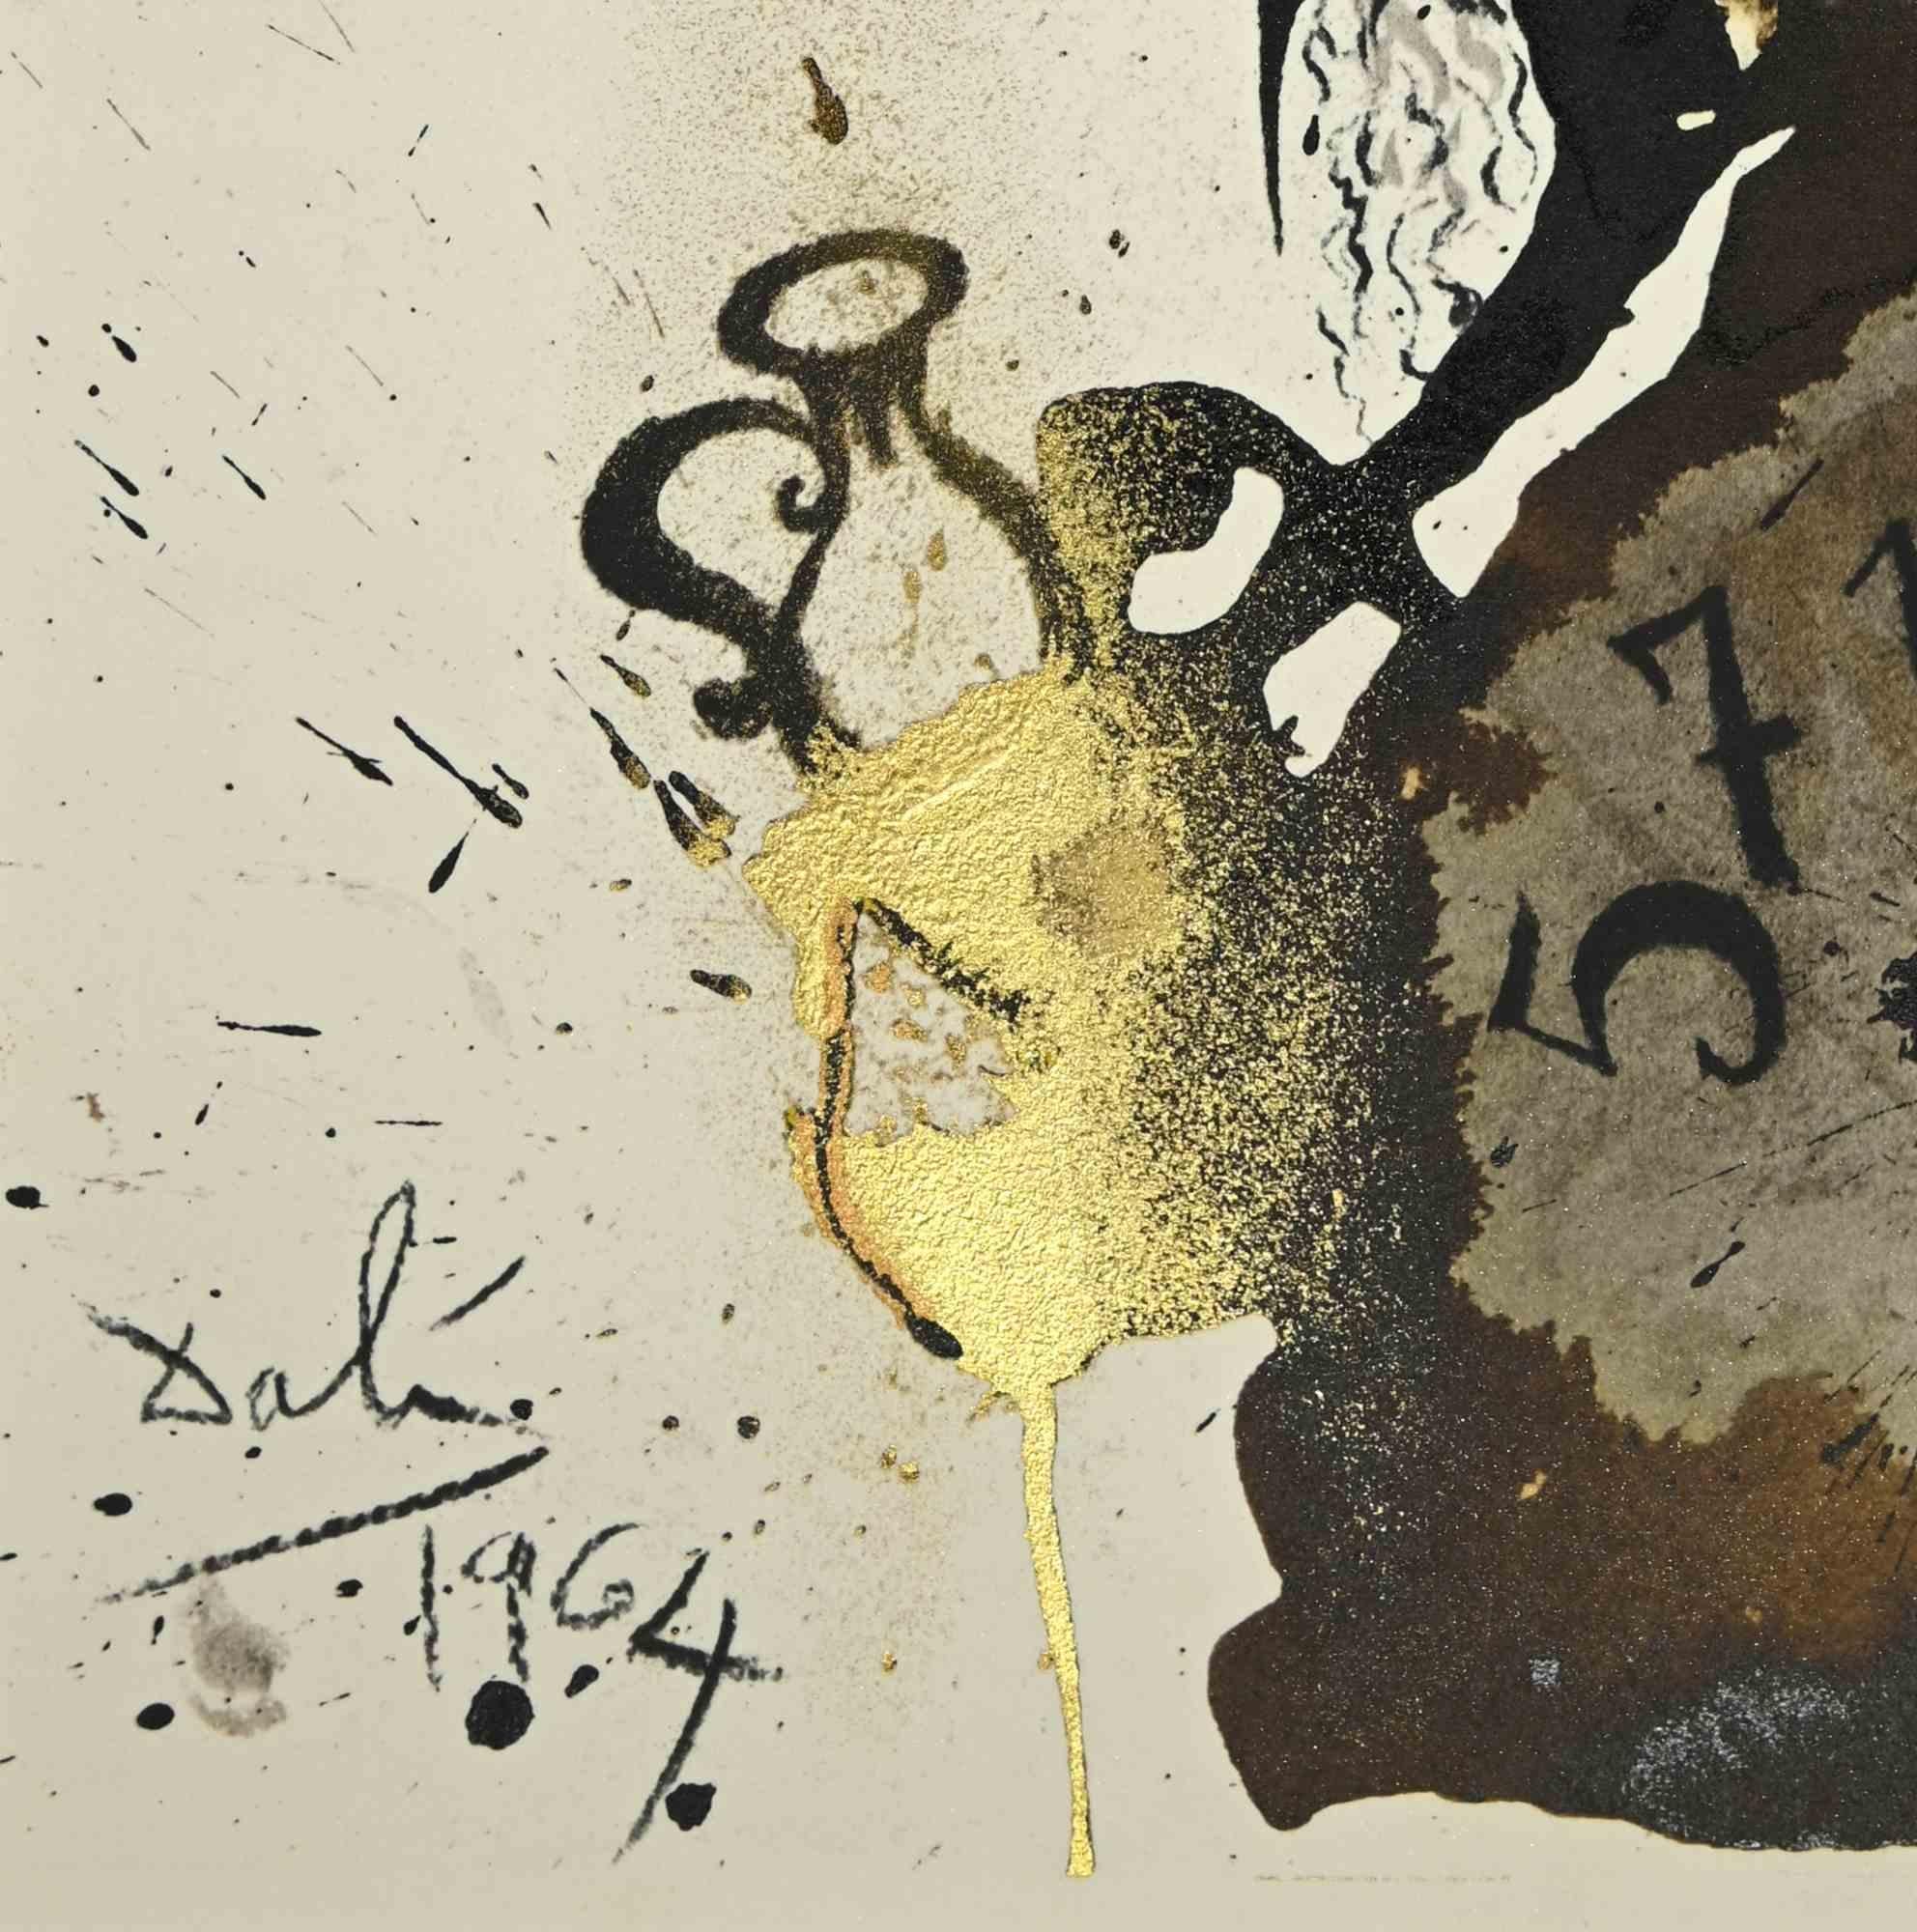 Mane, Thecel, Phares - Lithograph  - 1964 - Print by Salvador Dalí